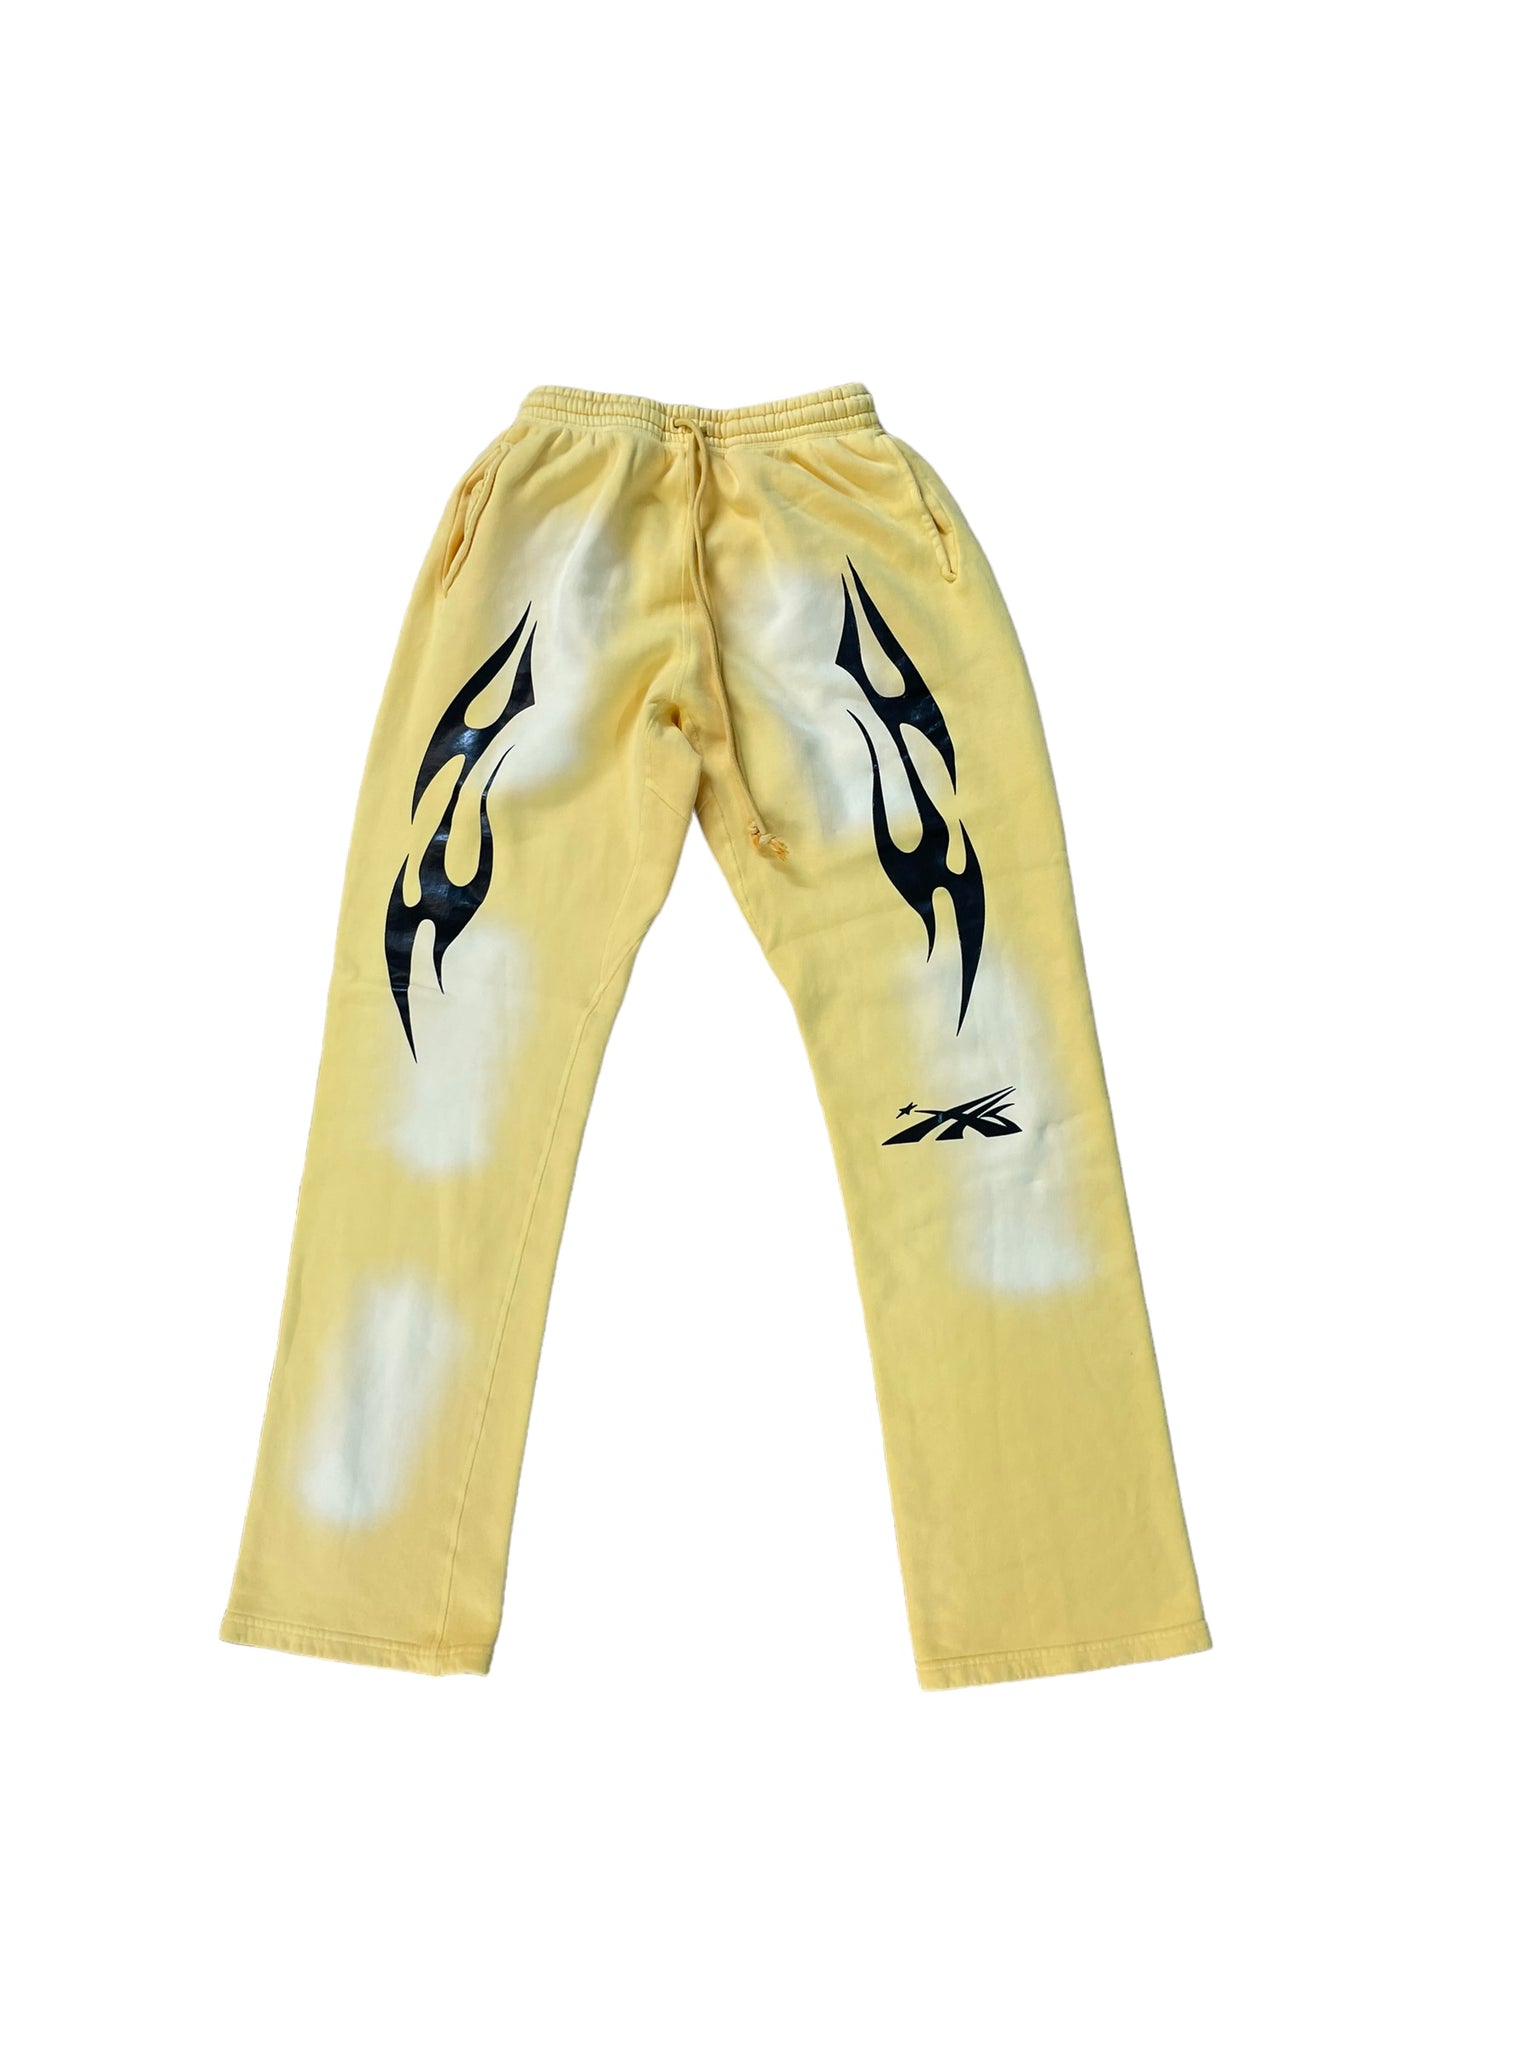 Hellstar Sweatpants "Yellow"